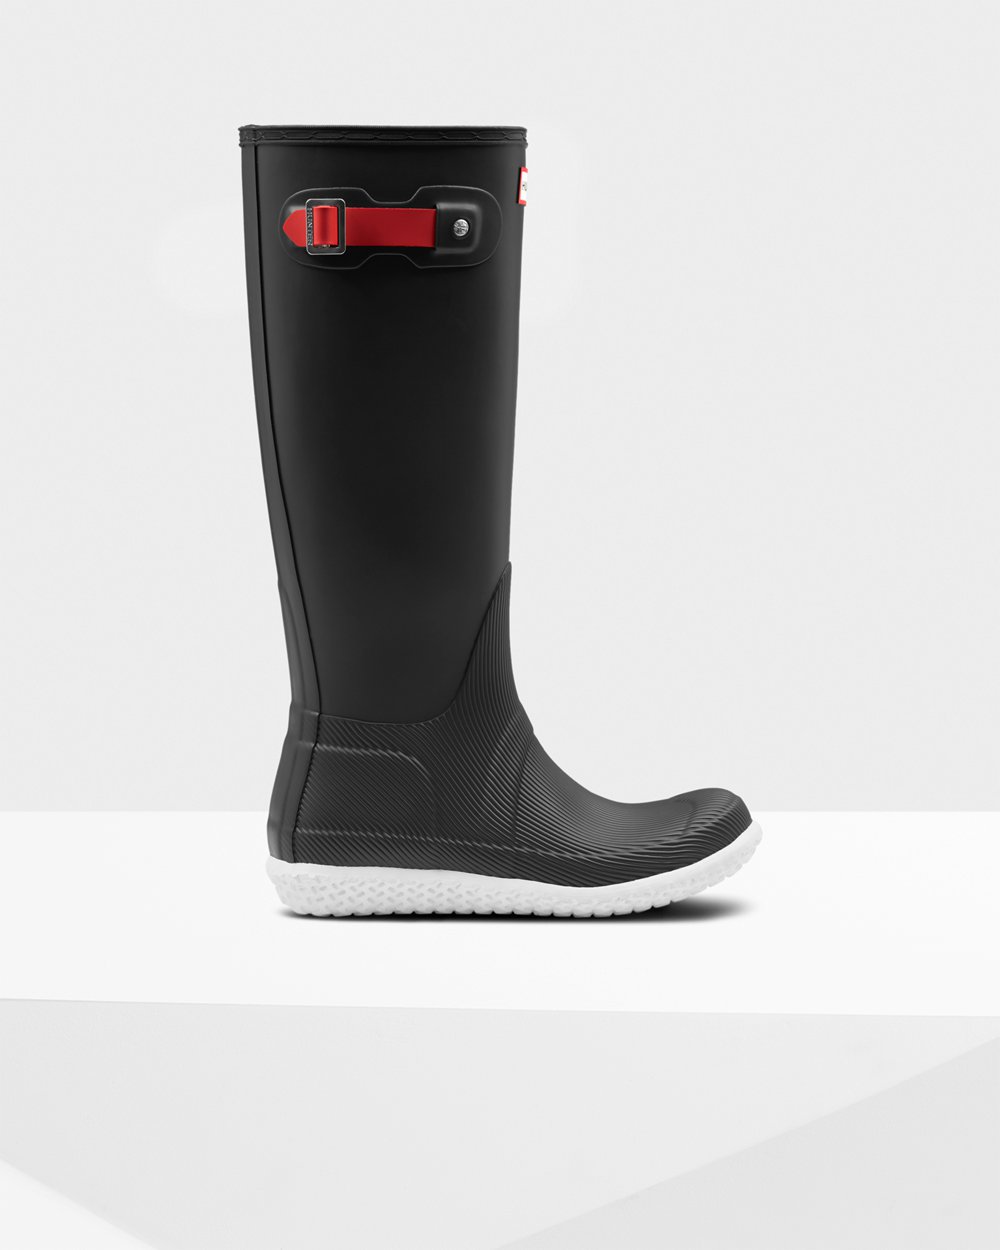 Womens Tall Rain Boots - Hunter Original Flat Heel Calendar Sole (51LBFORTY) - Black/Red